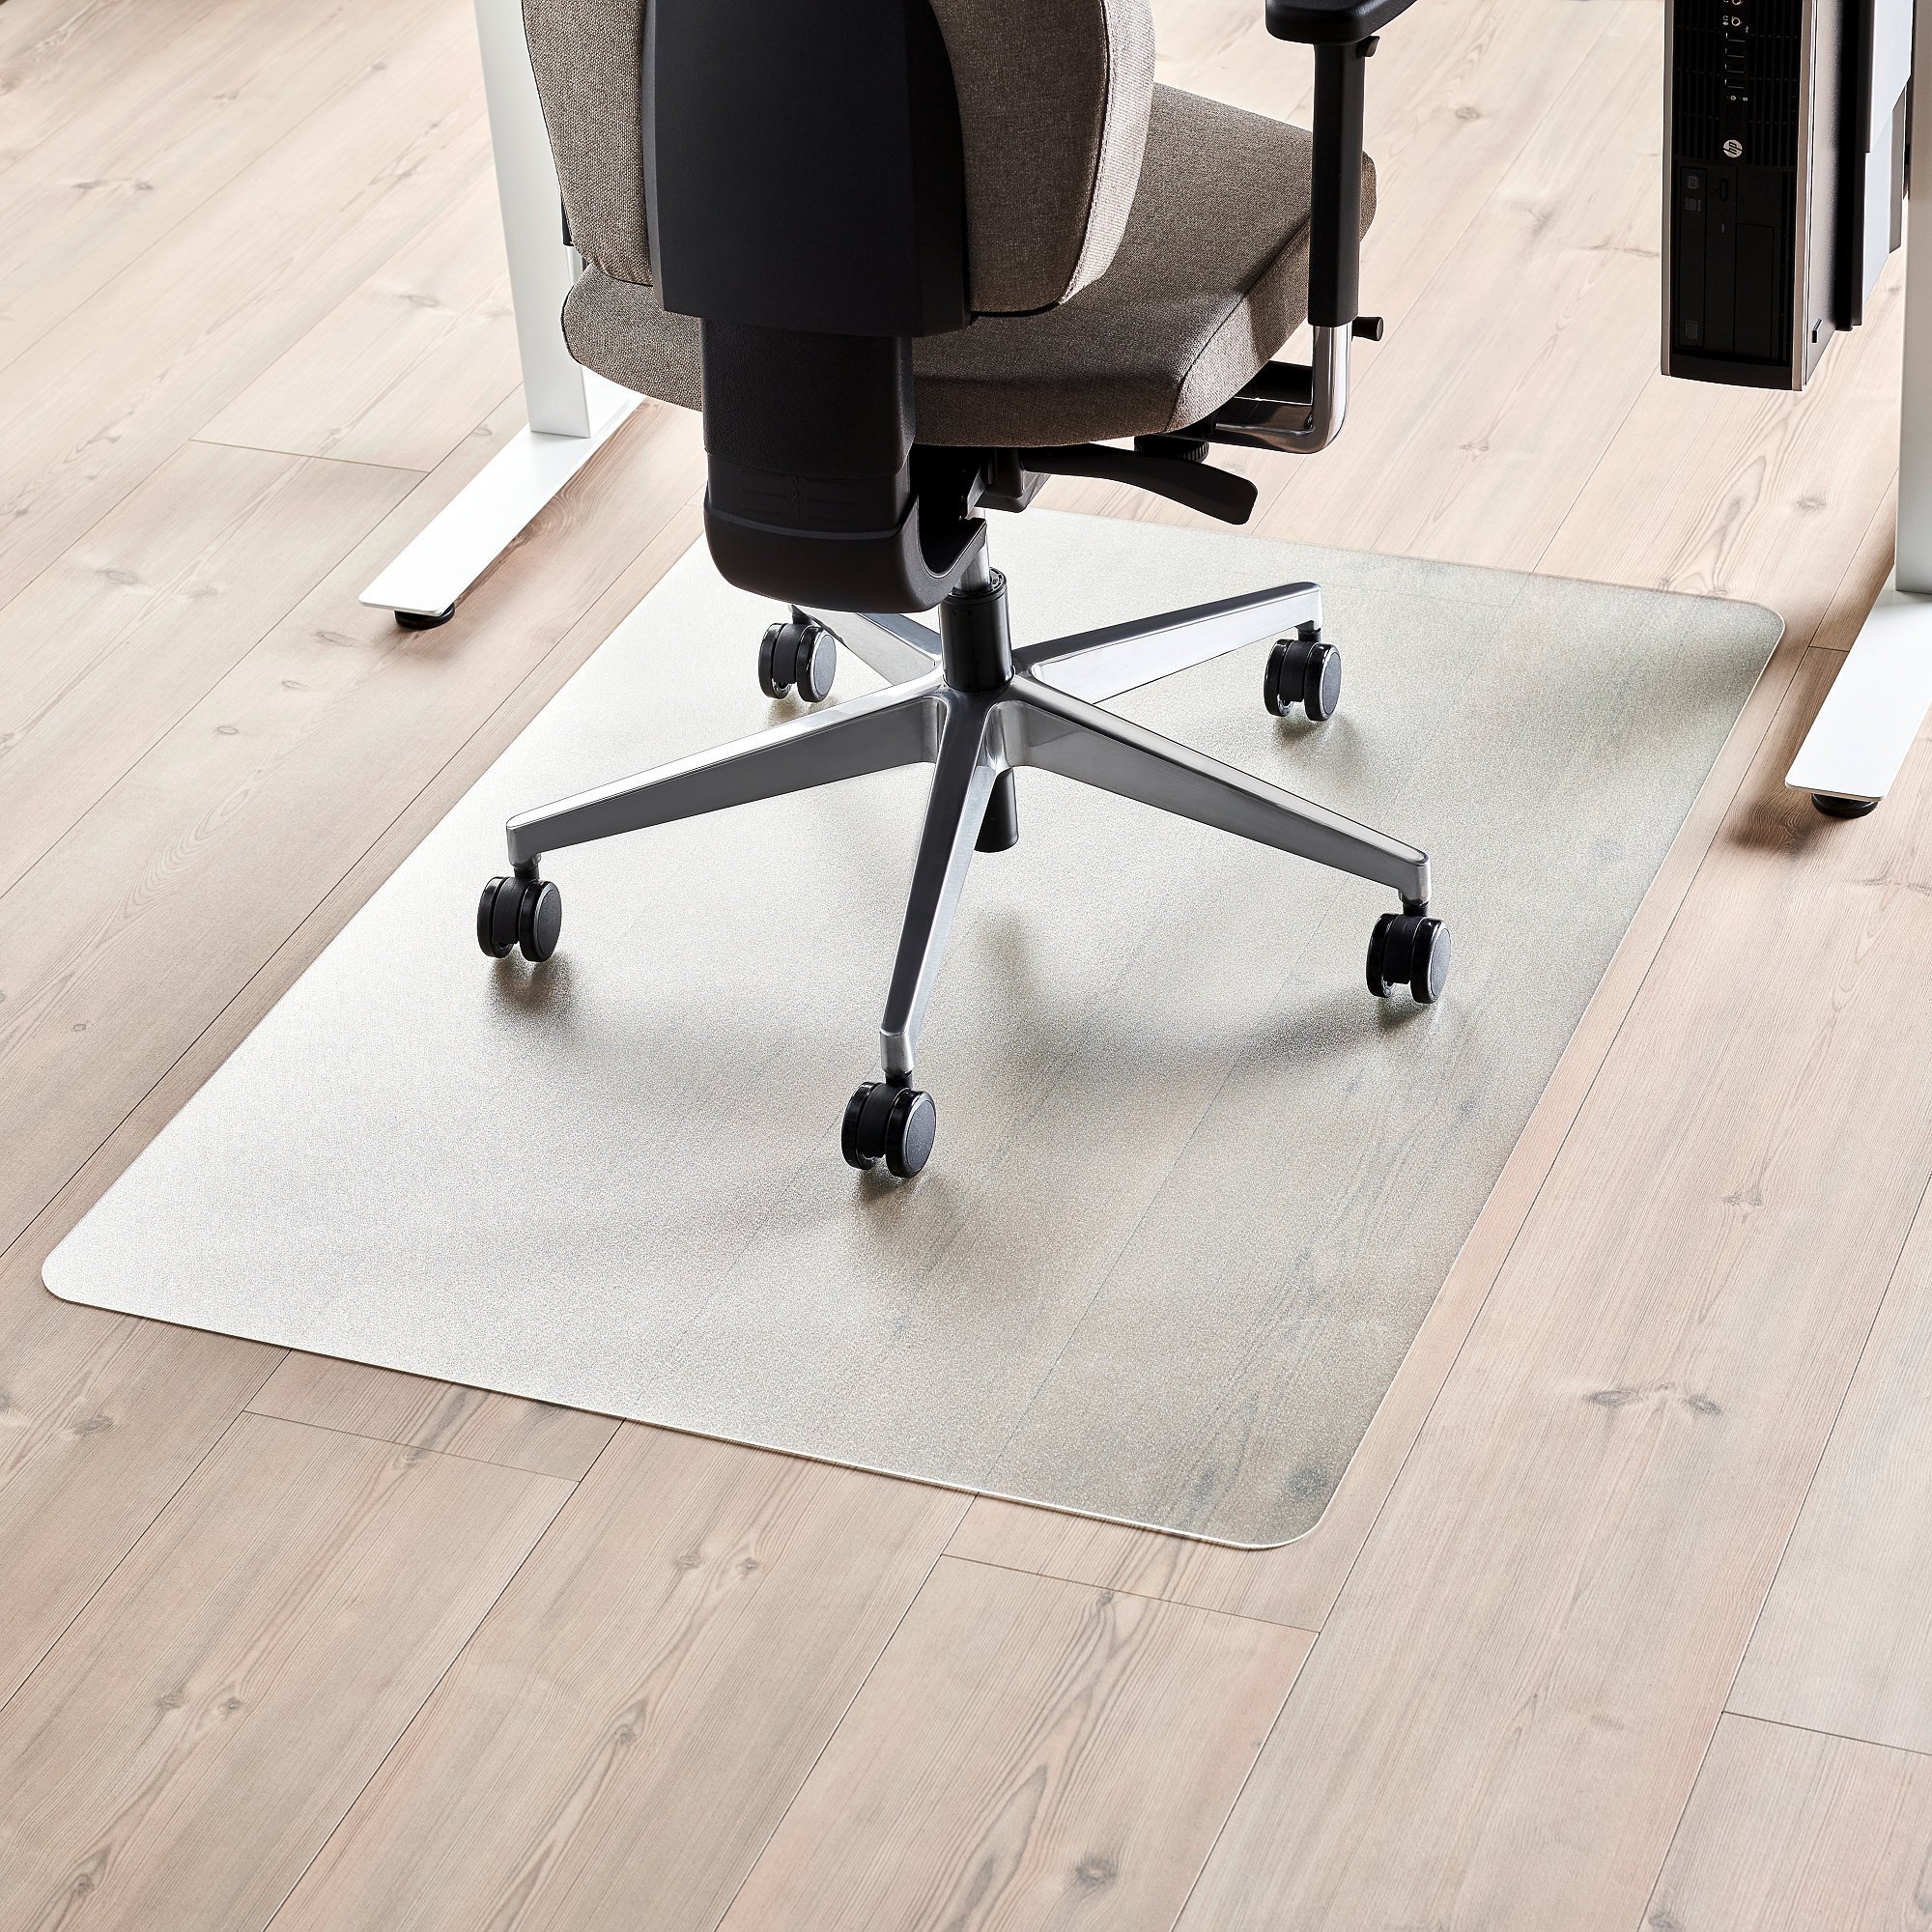 Chair mat for hard floors, 900x1200 mm